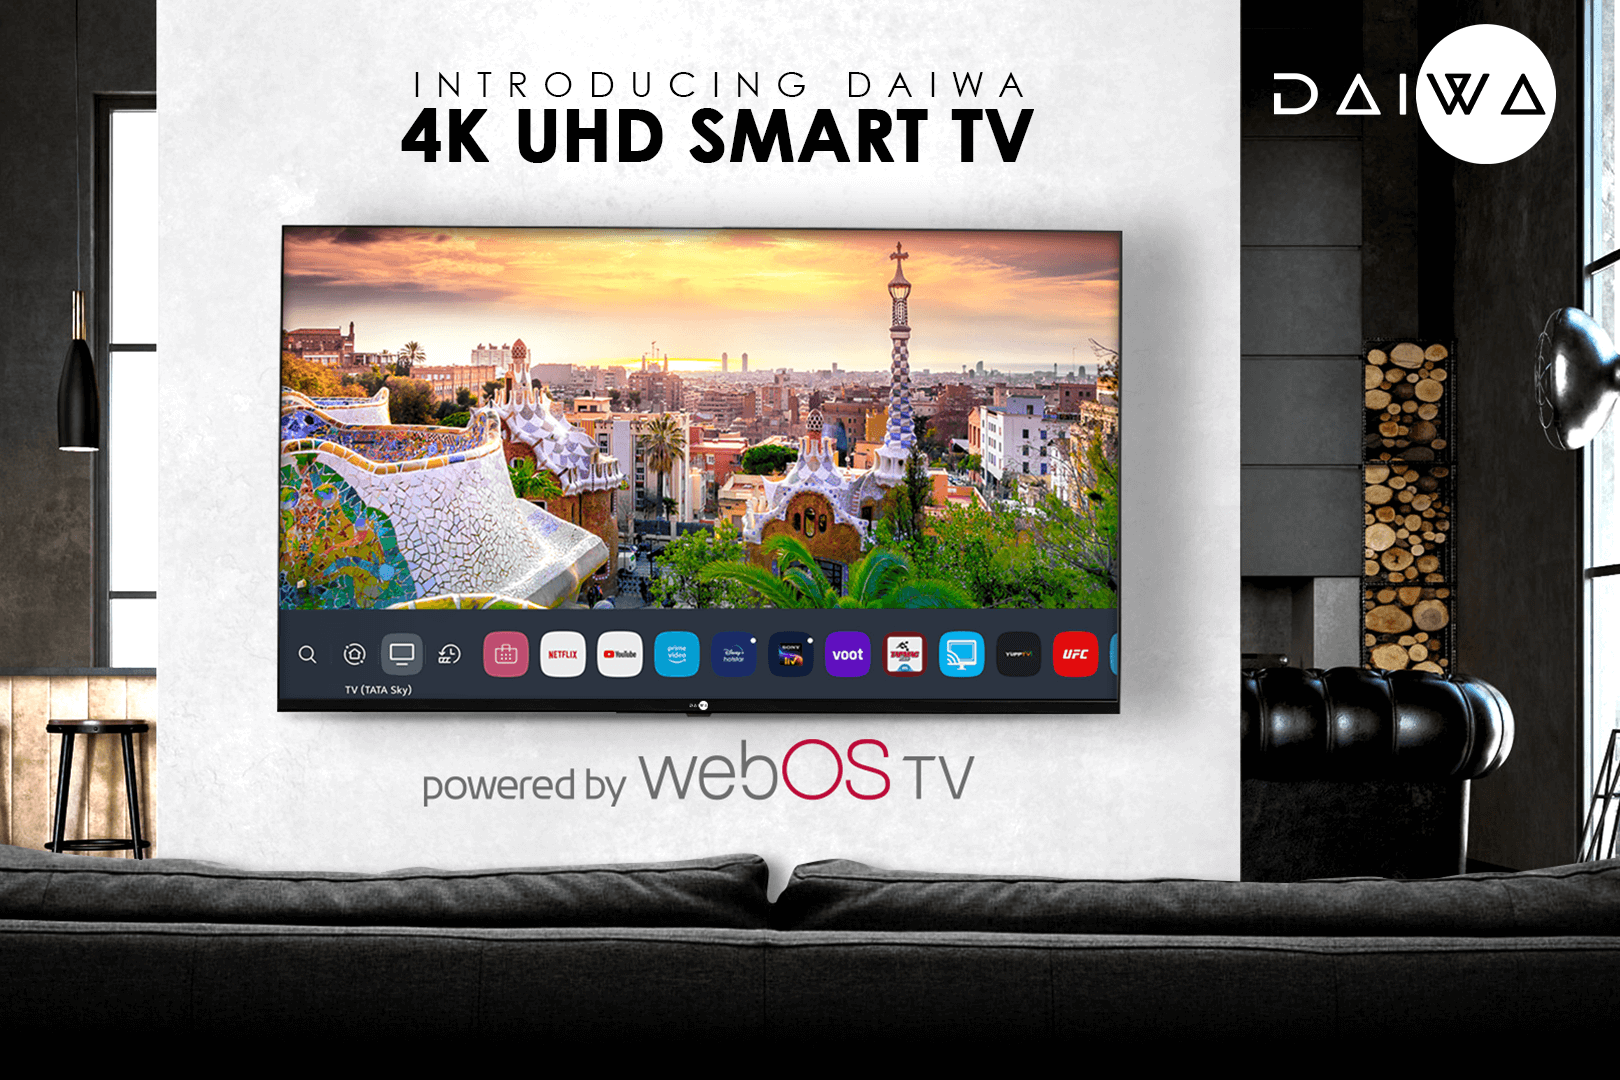 Daiwa D50U1WOS Smart TV Featured B